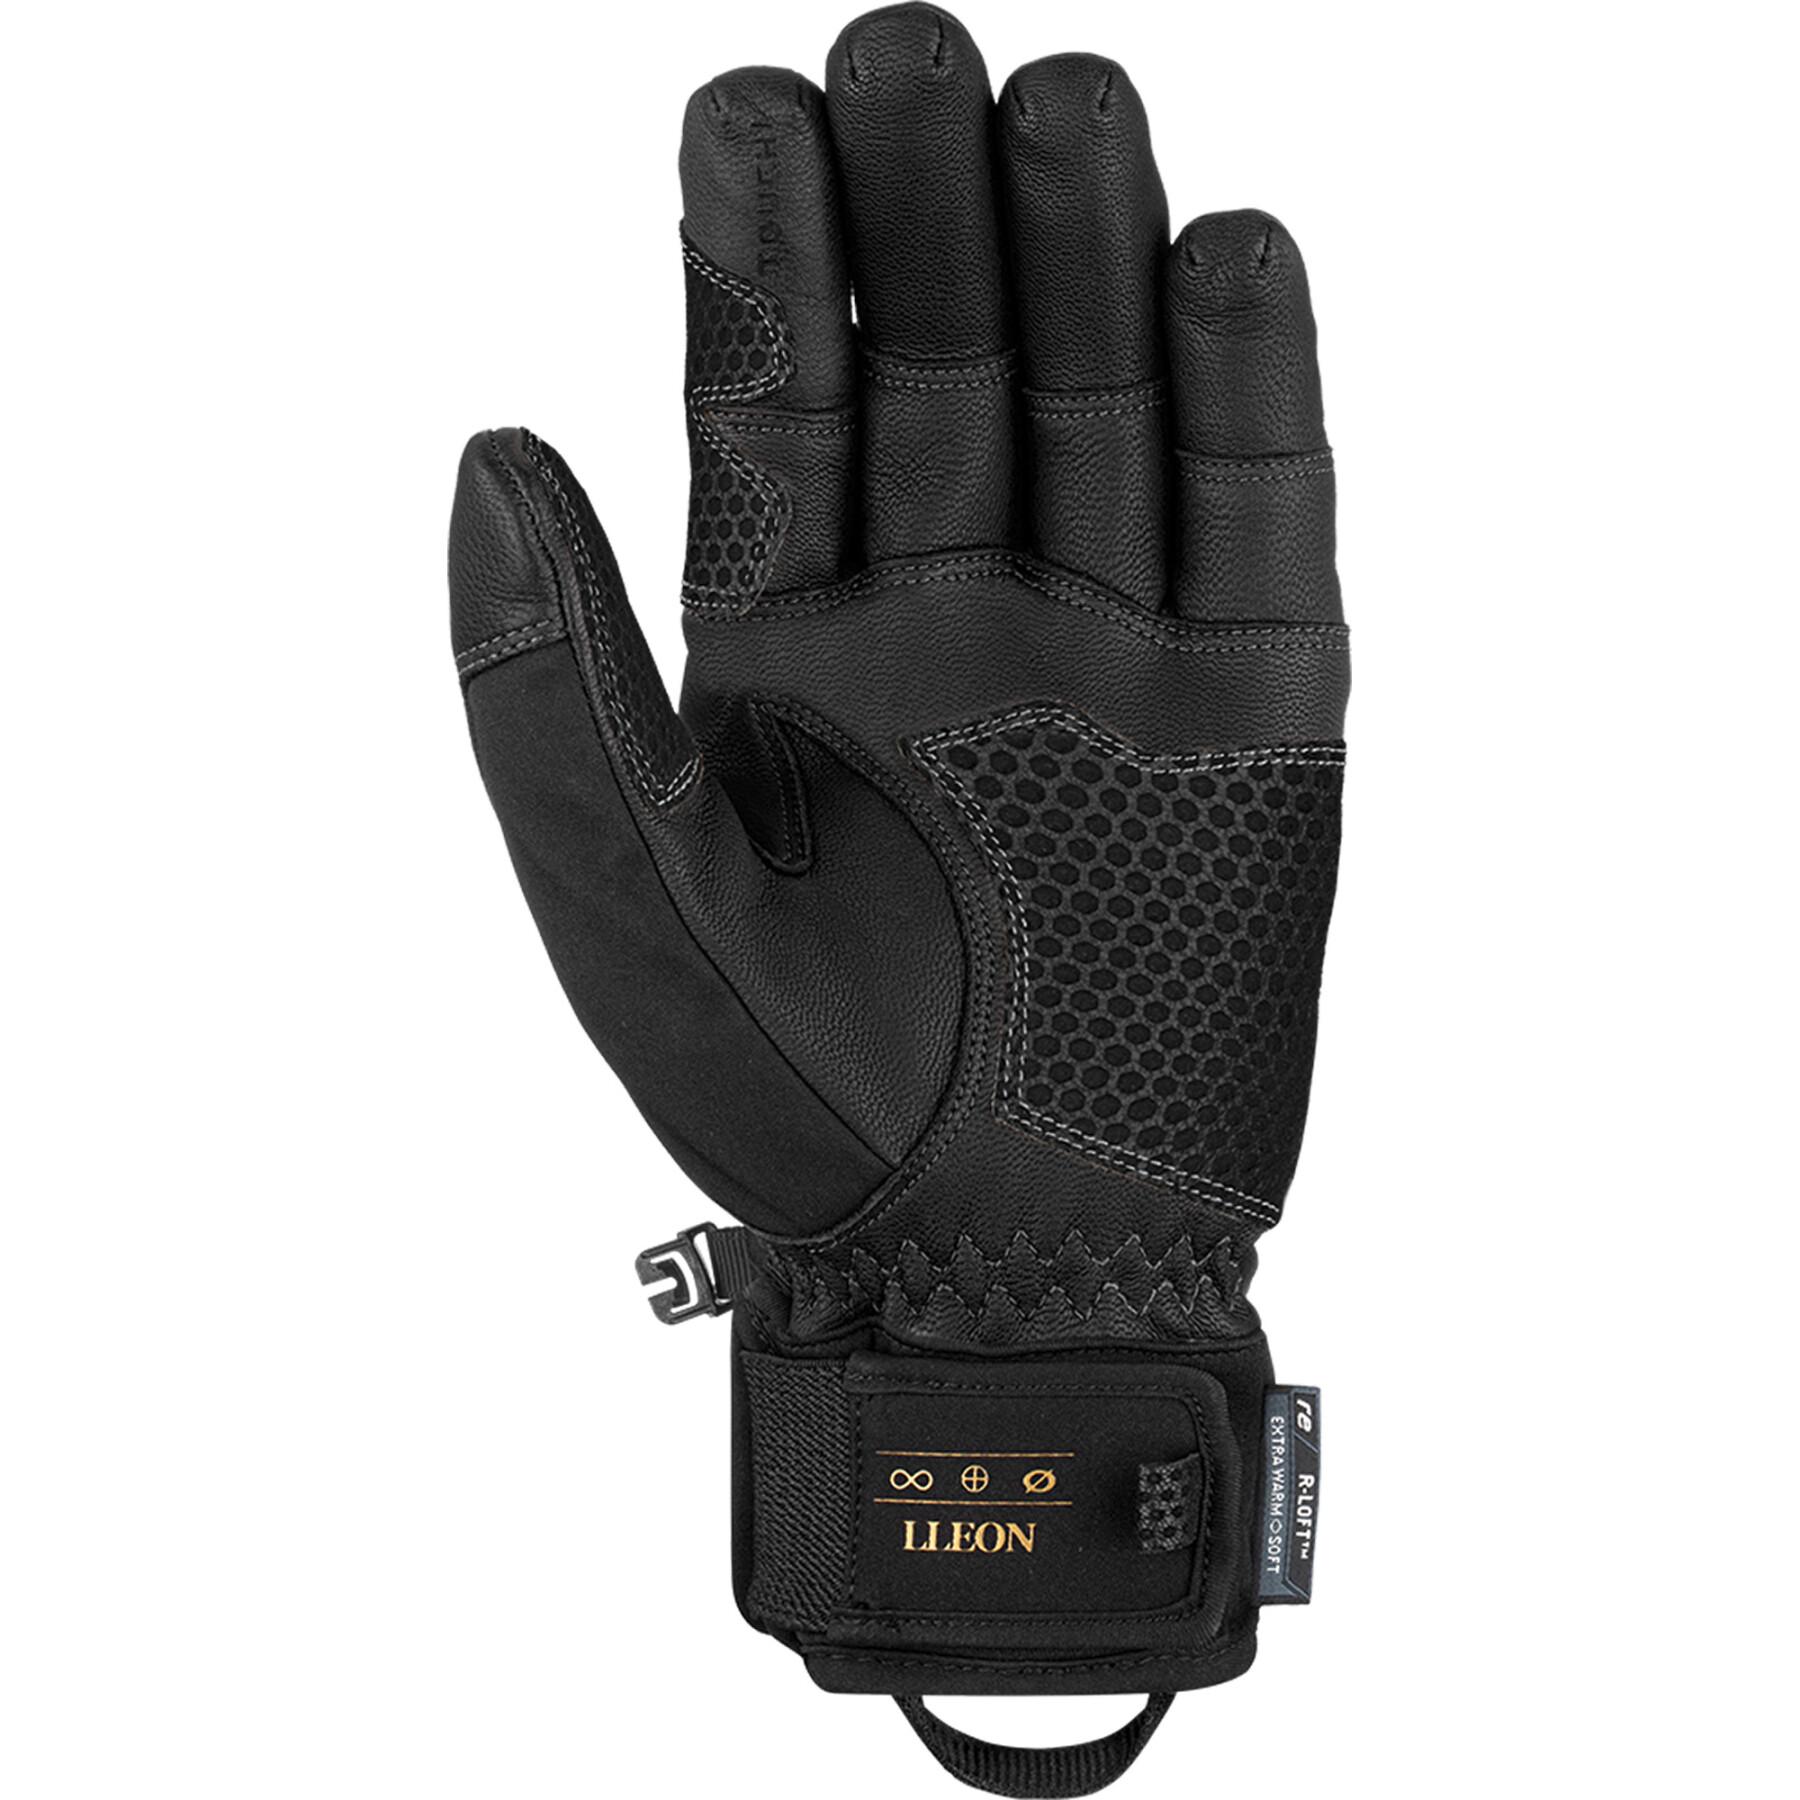 Handschuhe Reusch Lleon R-TEX® XT - Handschuhe Wintersport - Zubehör 